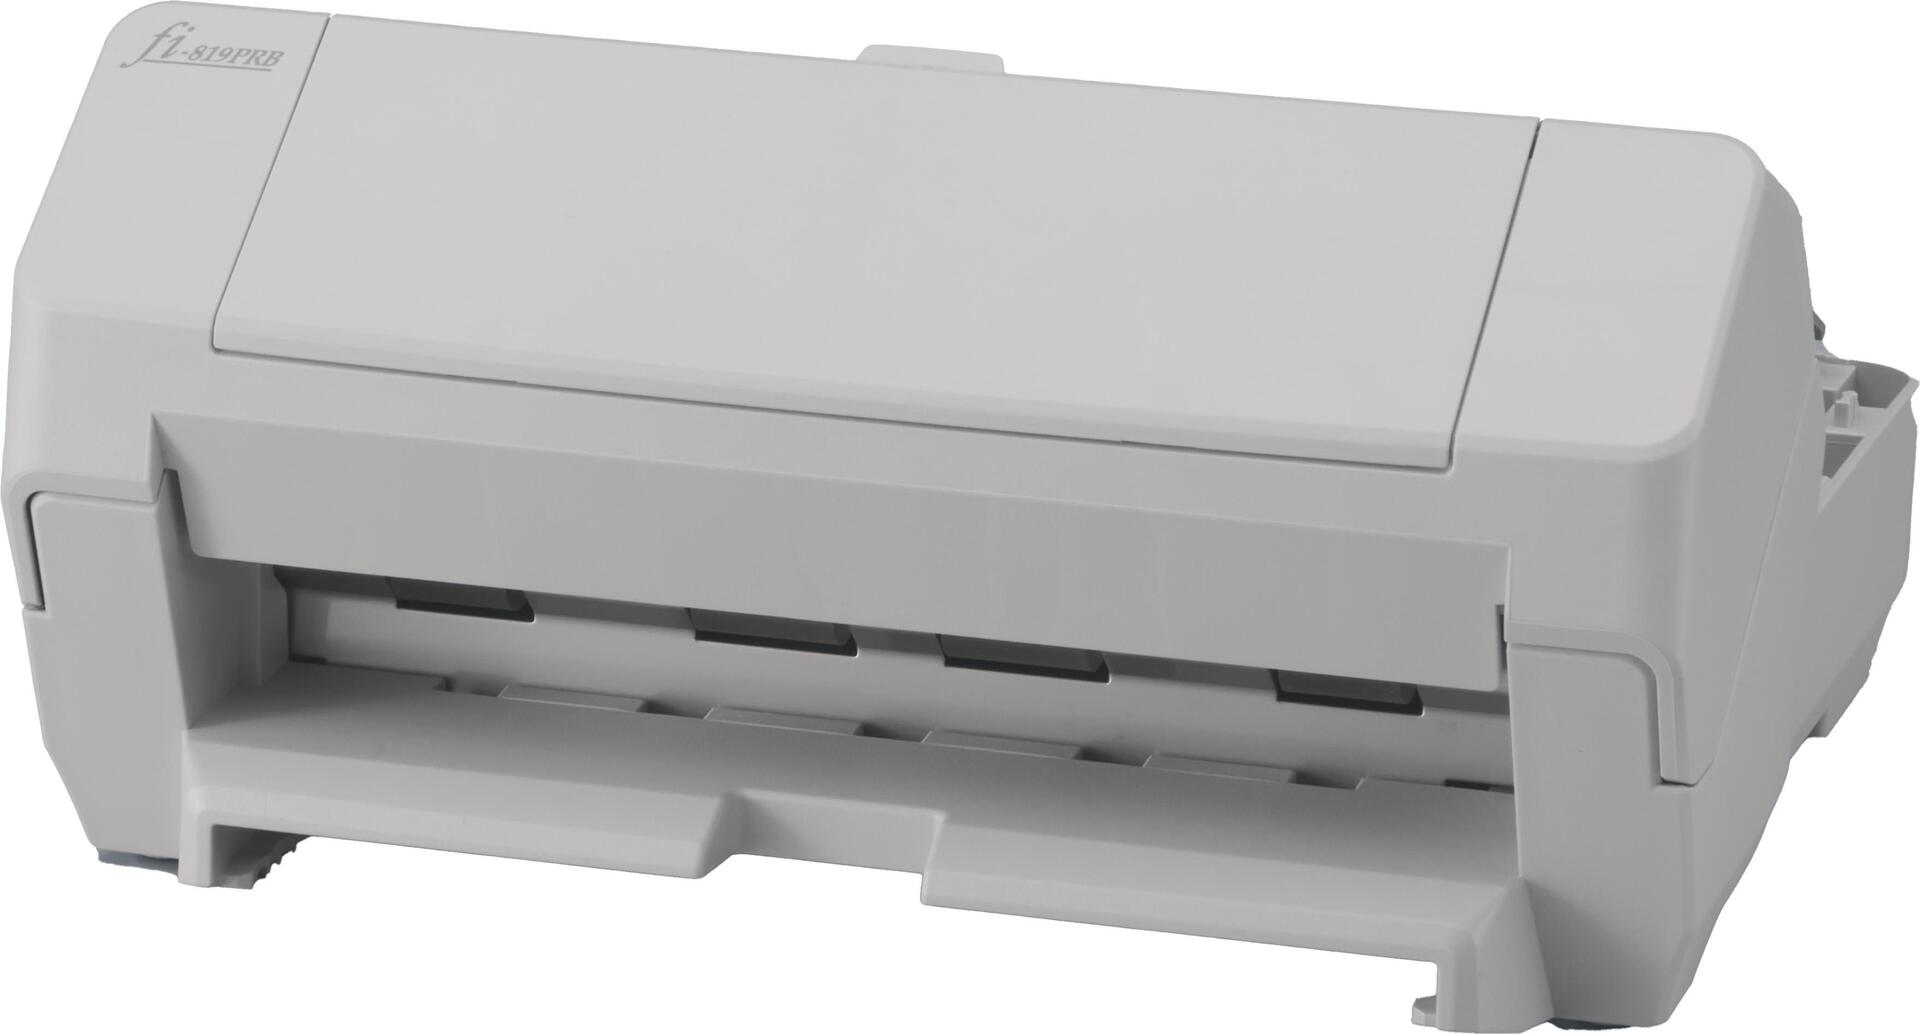 Fujitsu Scanner-Post-Imprinter (PA03810-D201)